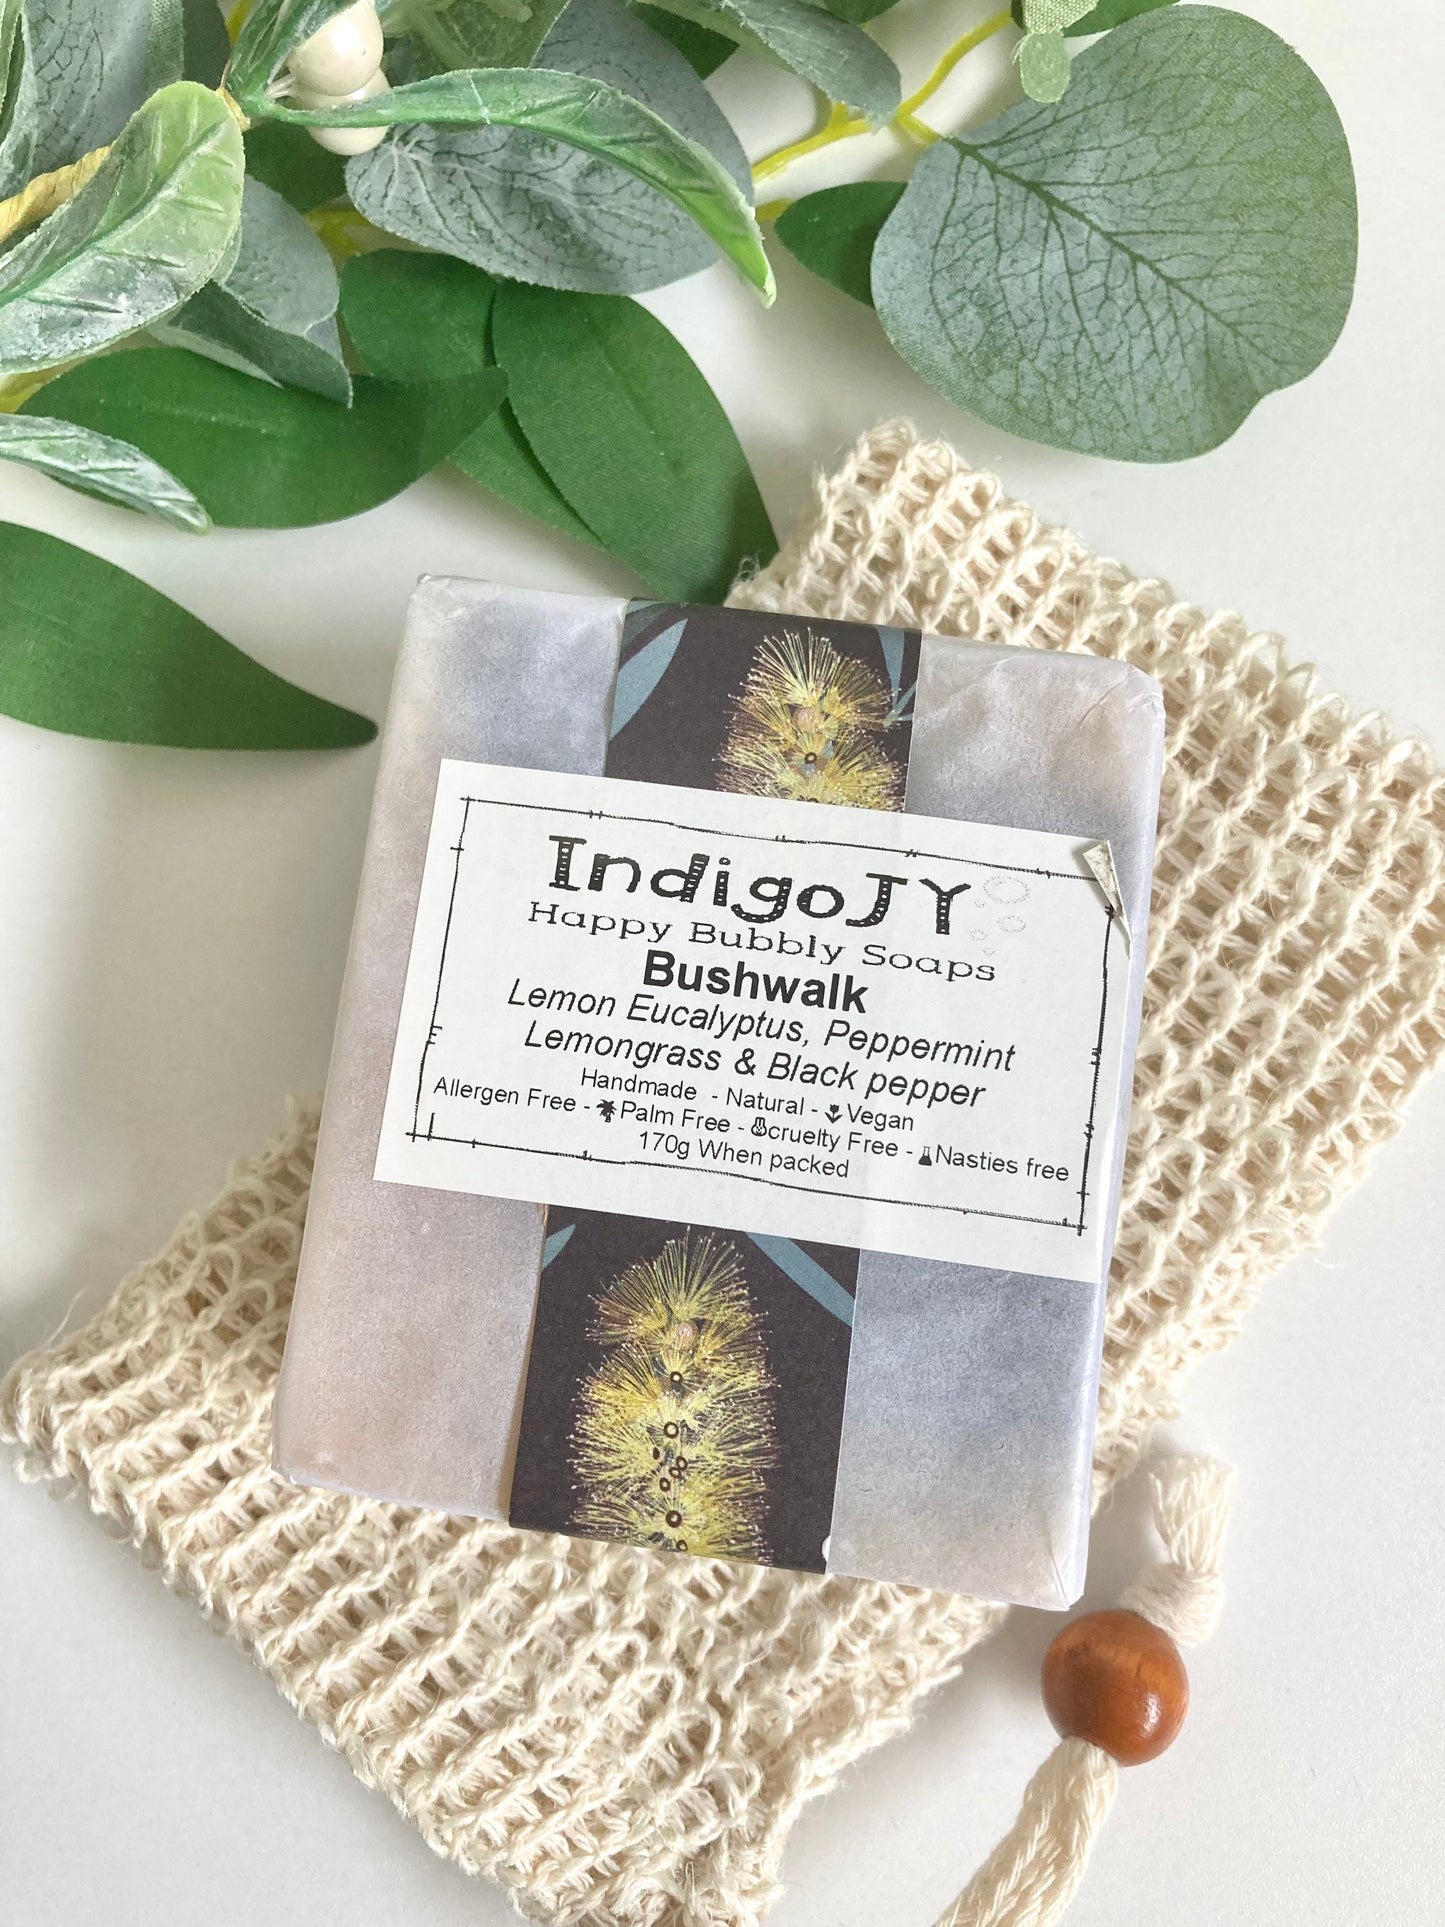 Organic Small Batch Handmade Soap in Australian Bushwalk Scent